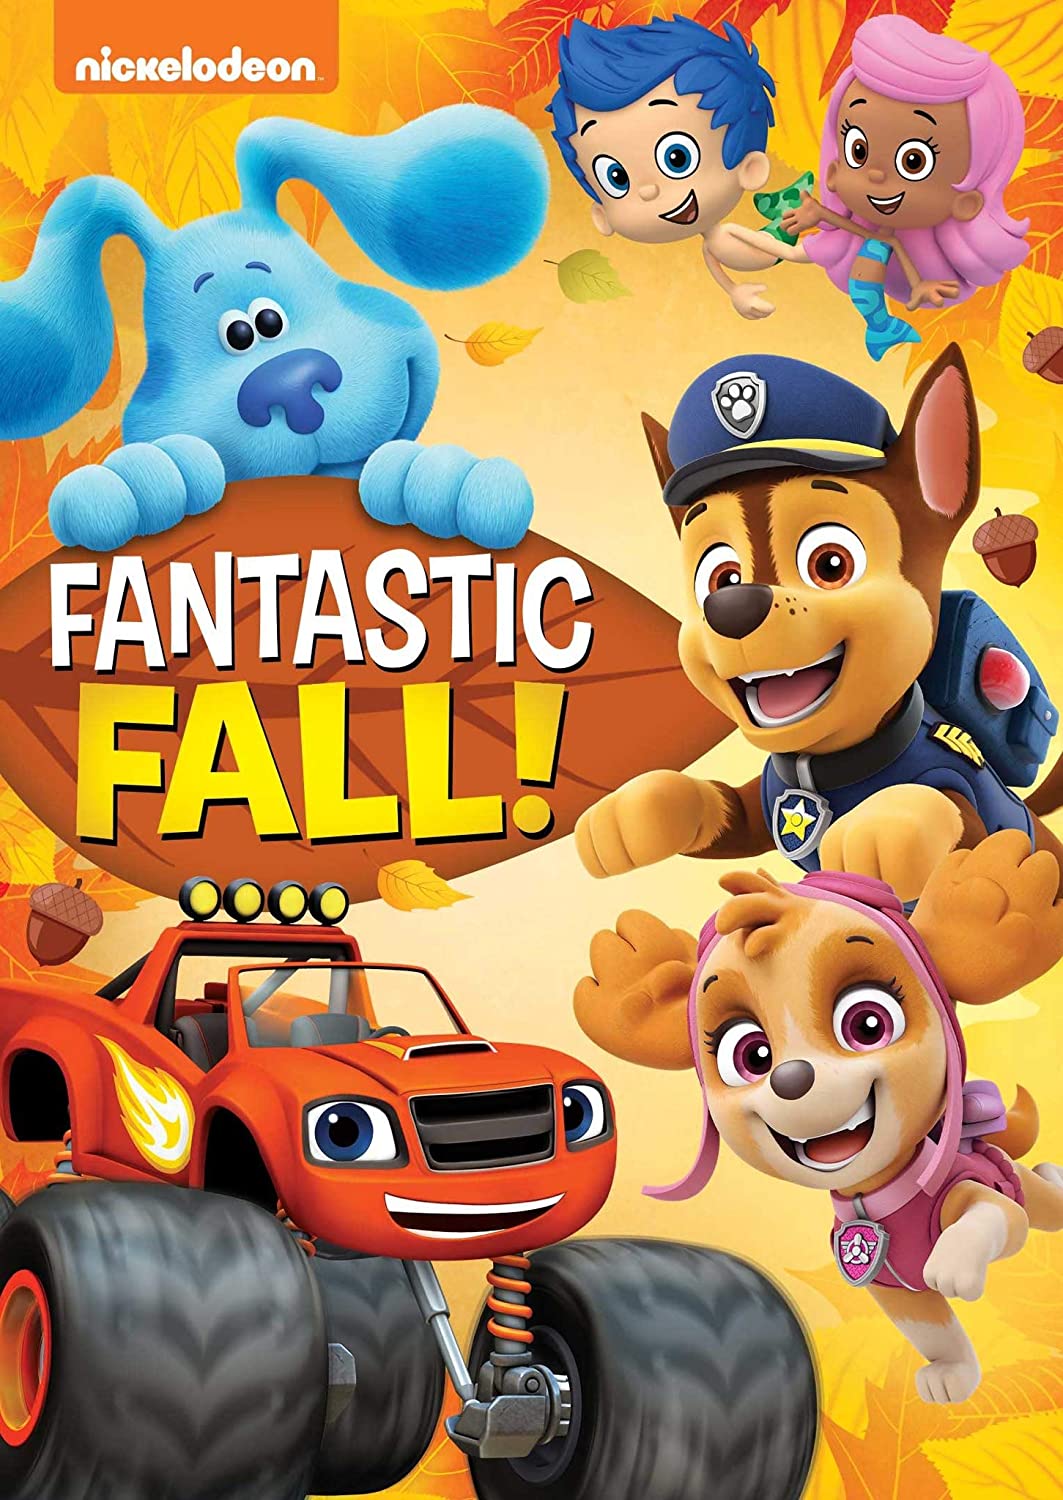 Nick Jr.: Fantastic Fall! DVD Giveaway! @NickelodeonDVD ...